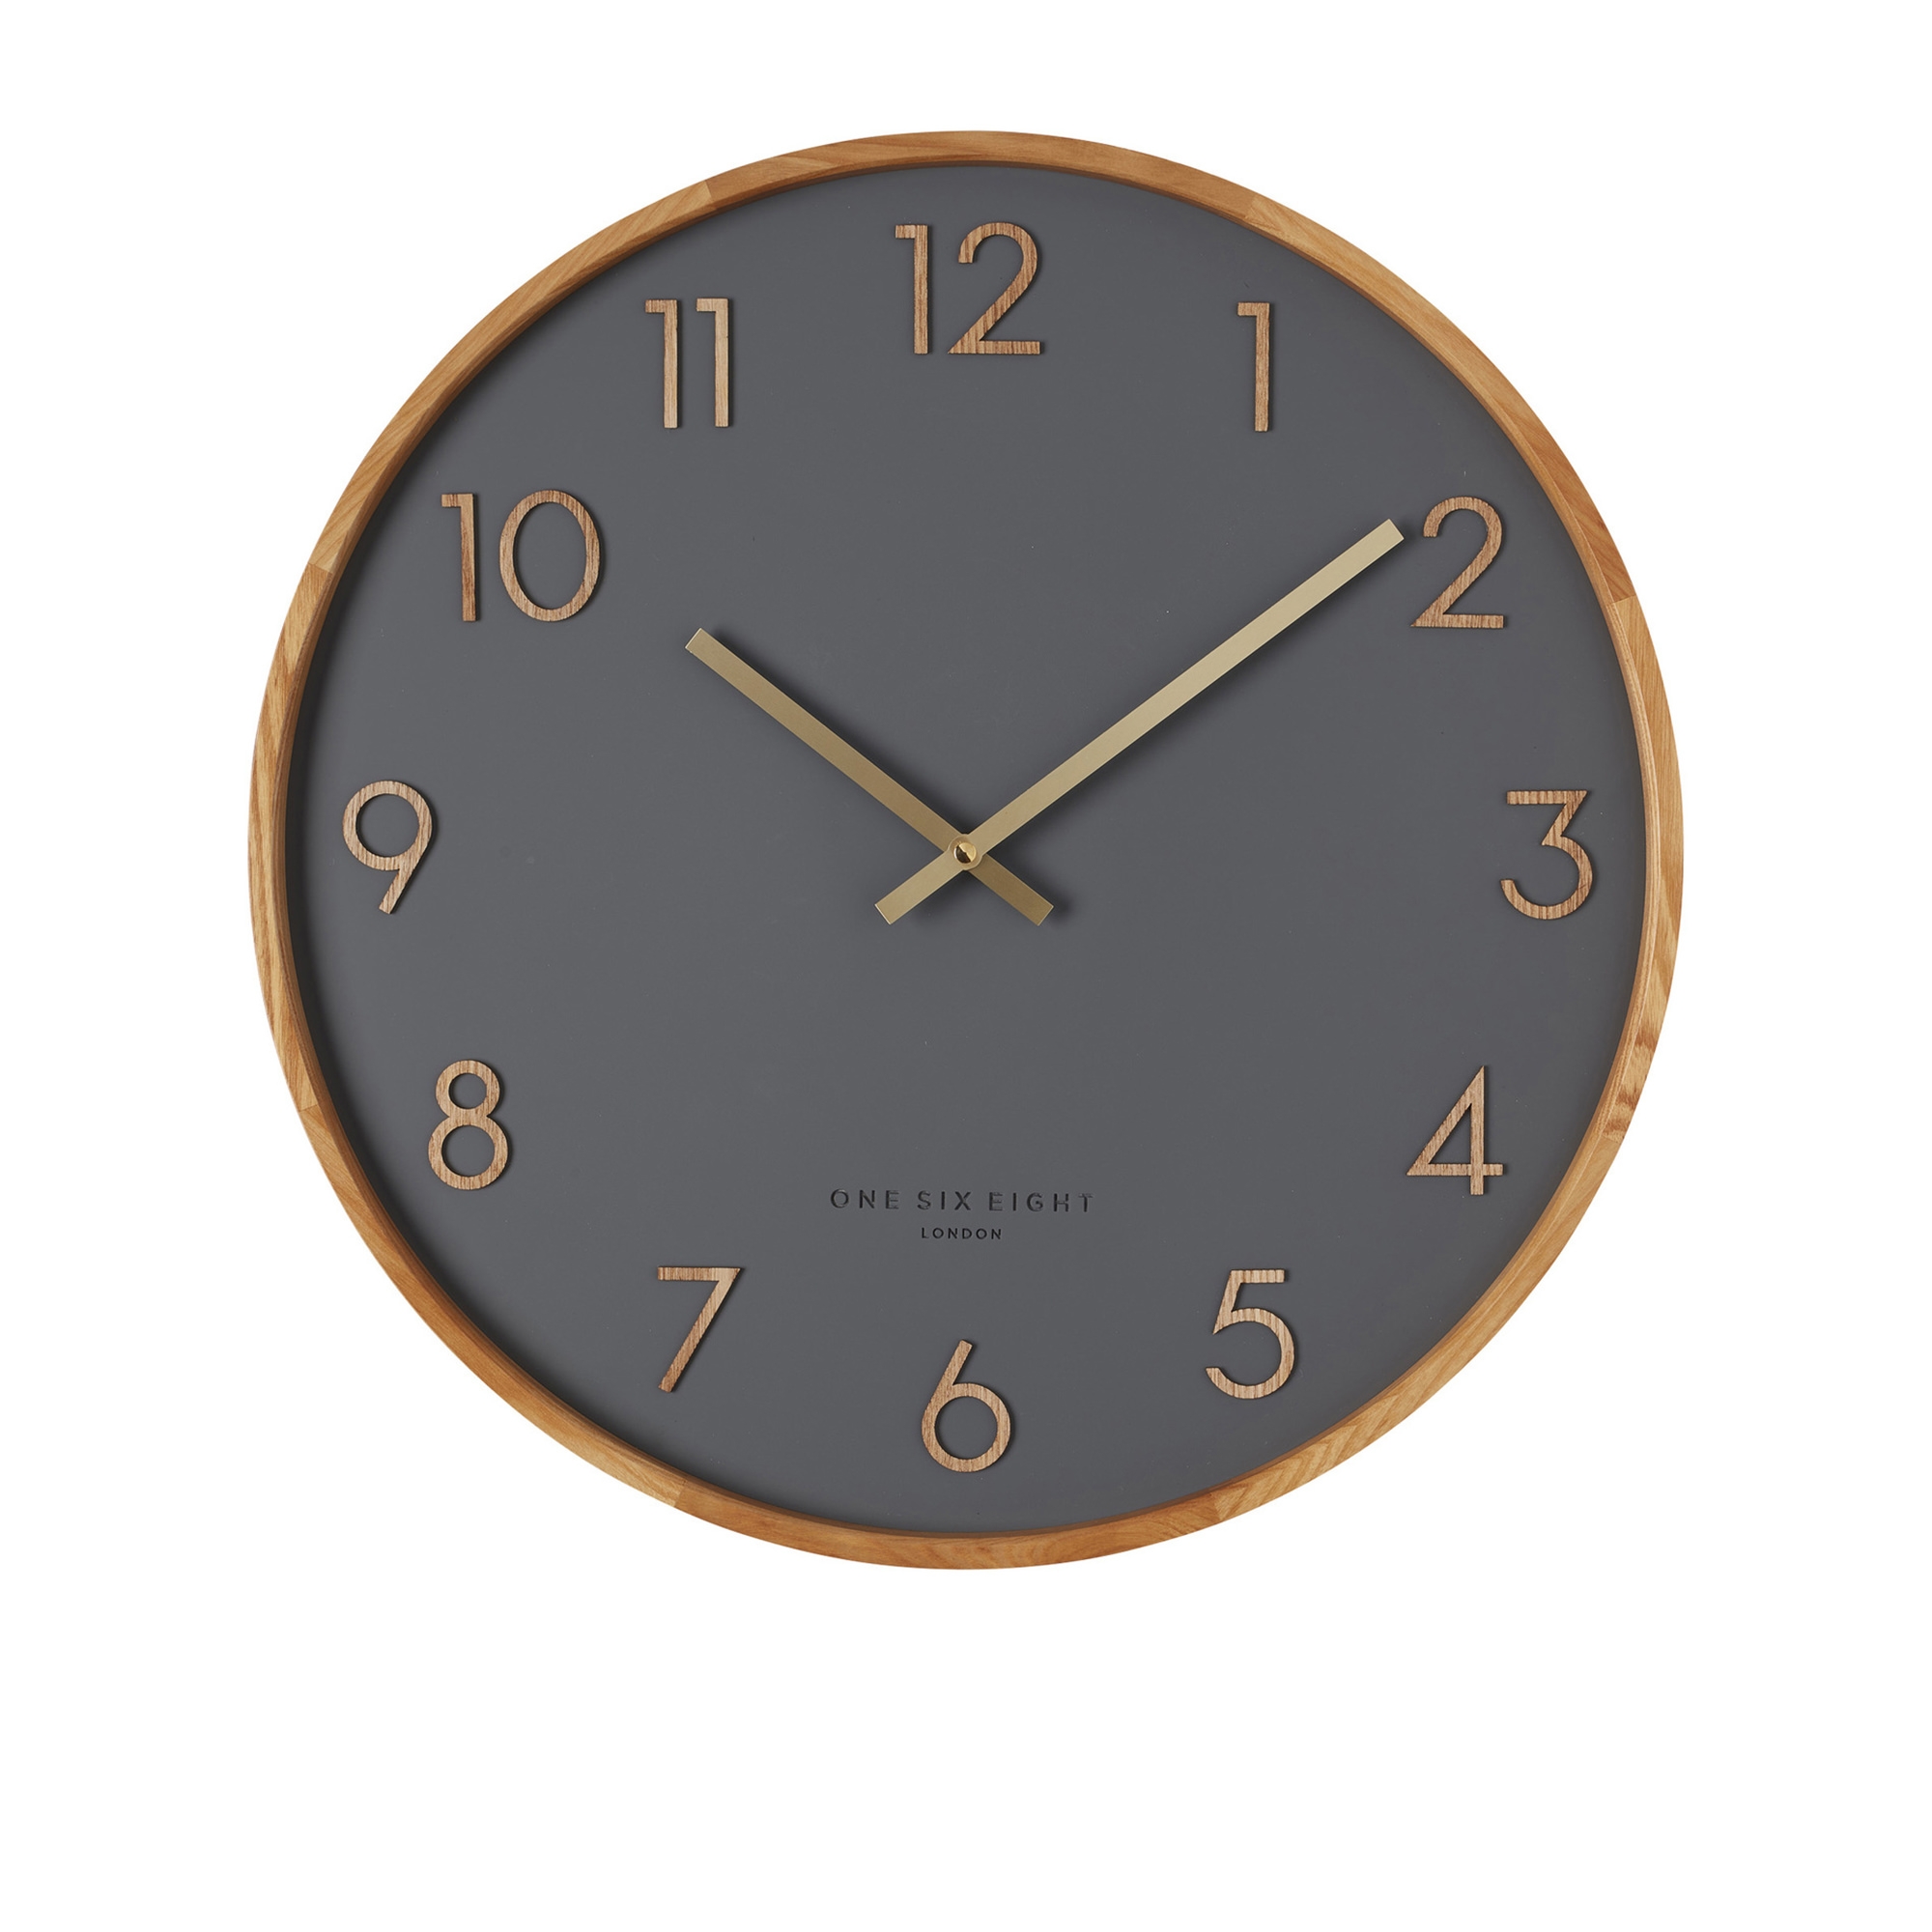 One Six Eight London Scarlett Wall Clock 50cm Charcoal Grey Image 1